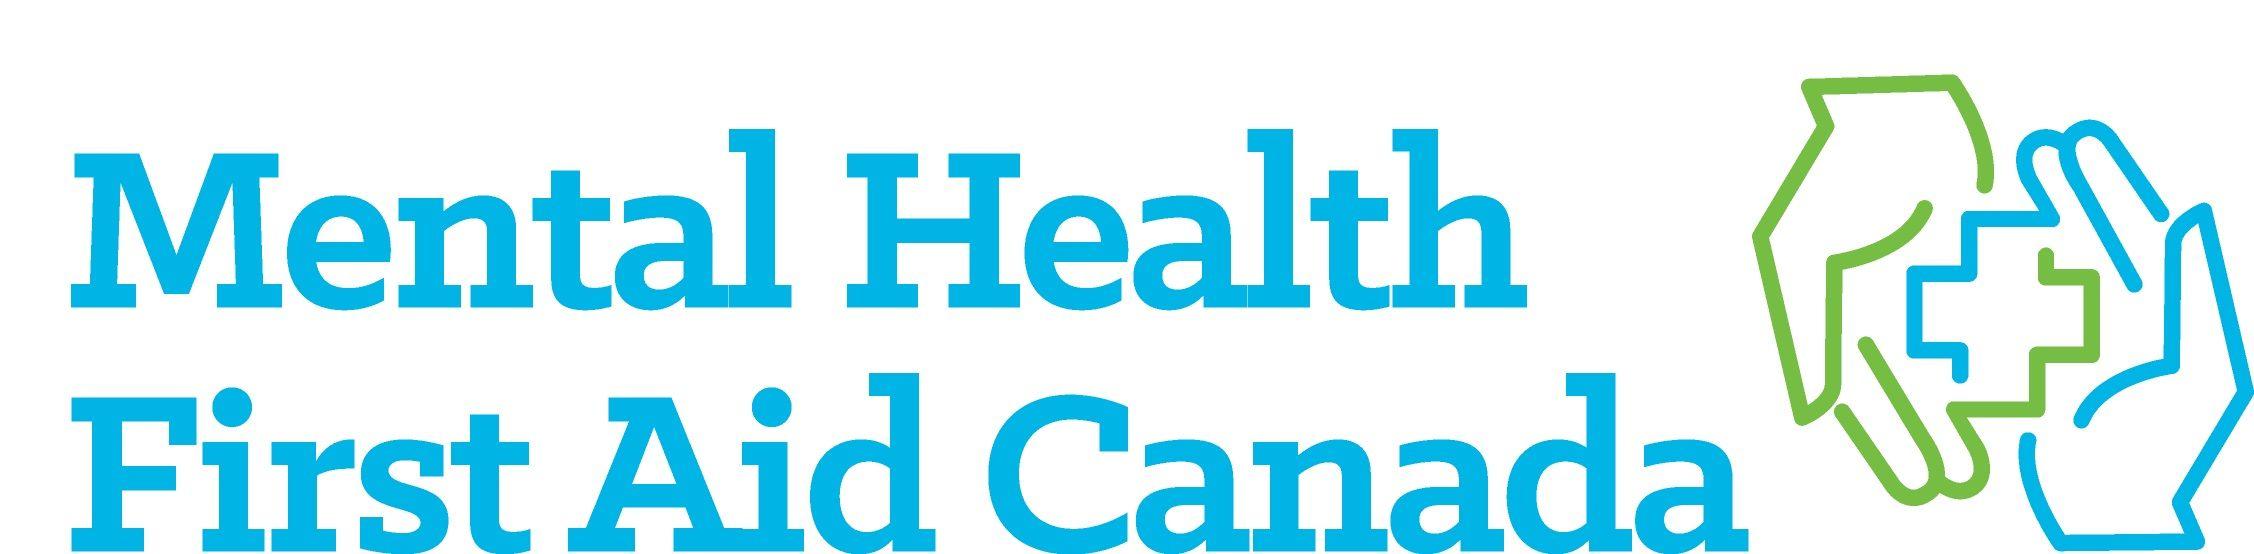 Mental Health First Aid Logo - Catalyst - February 2017 - New Mental Health First Aid Course ...